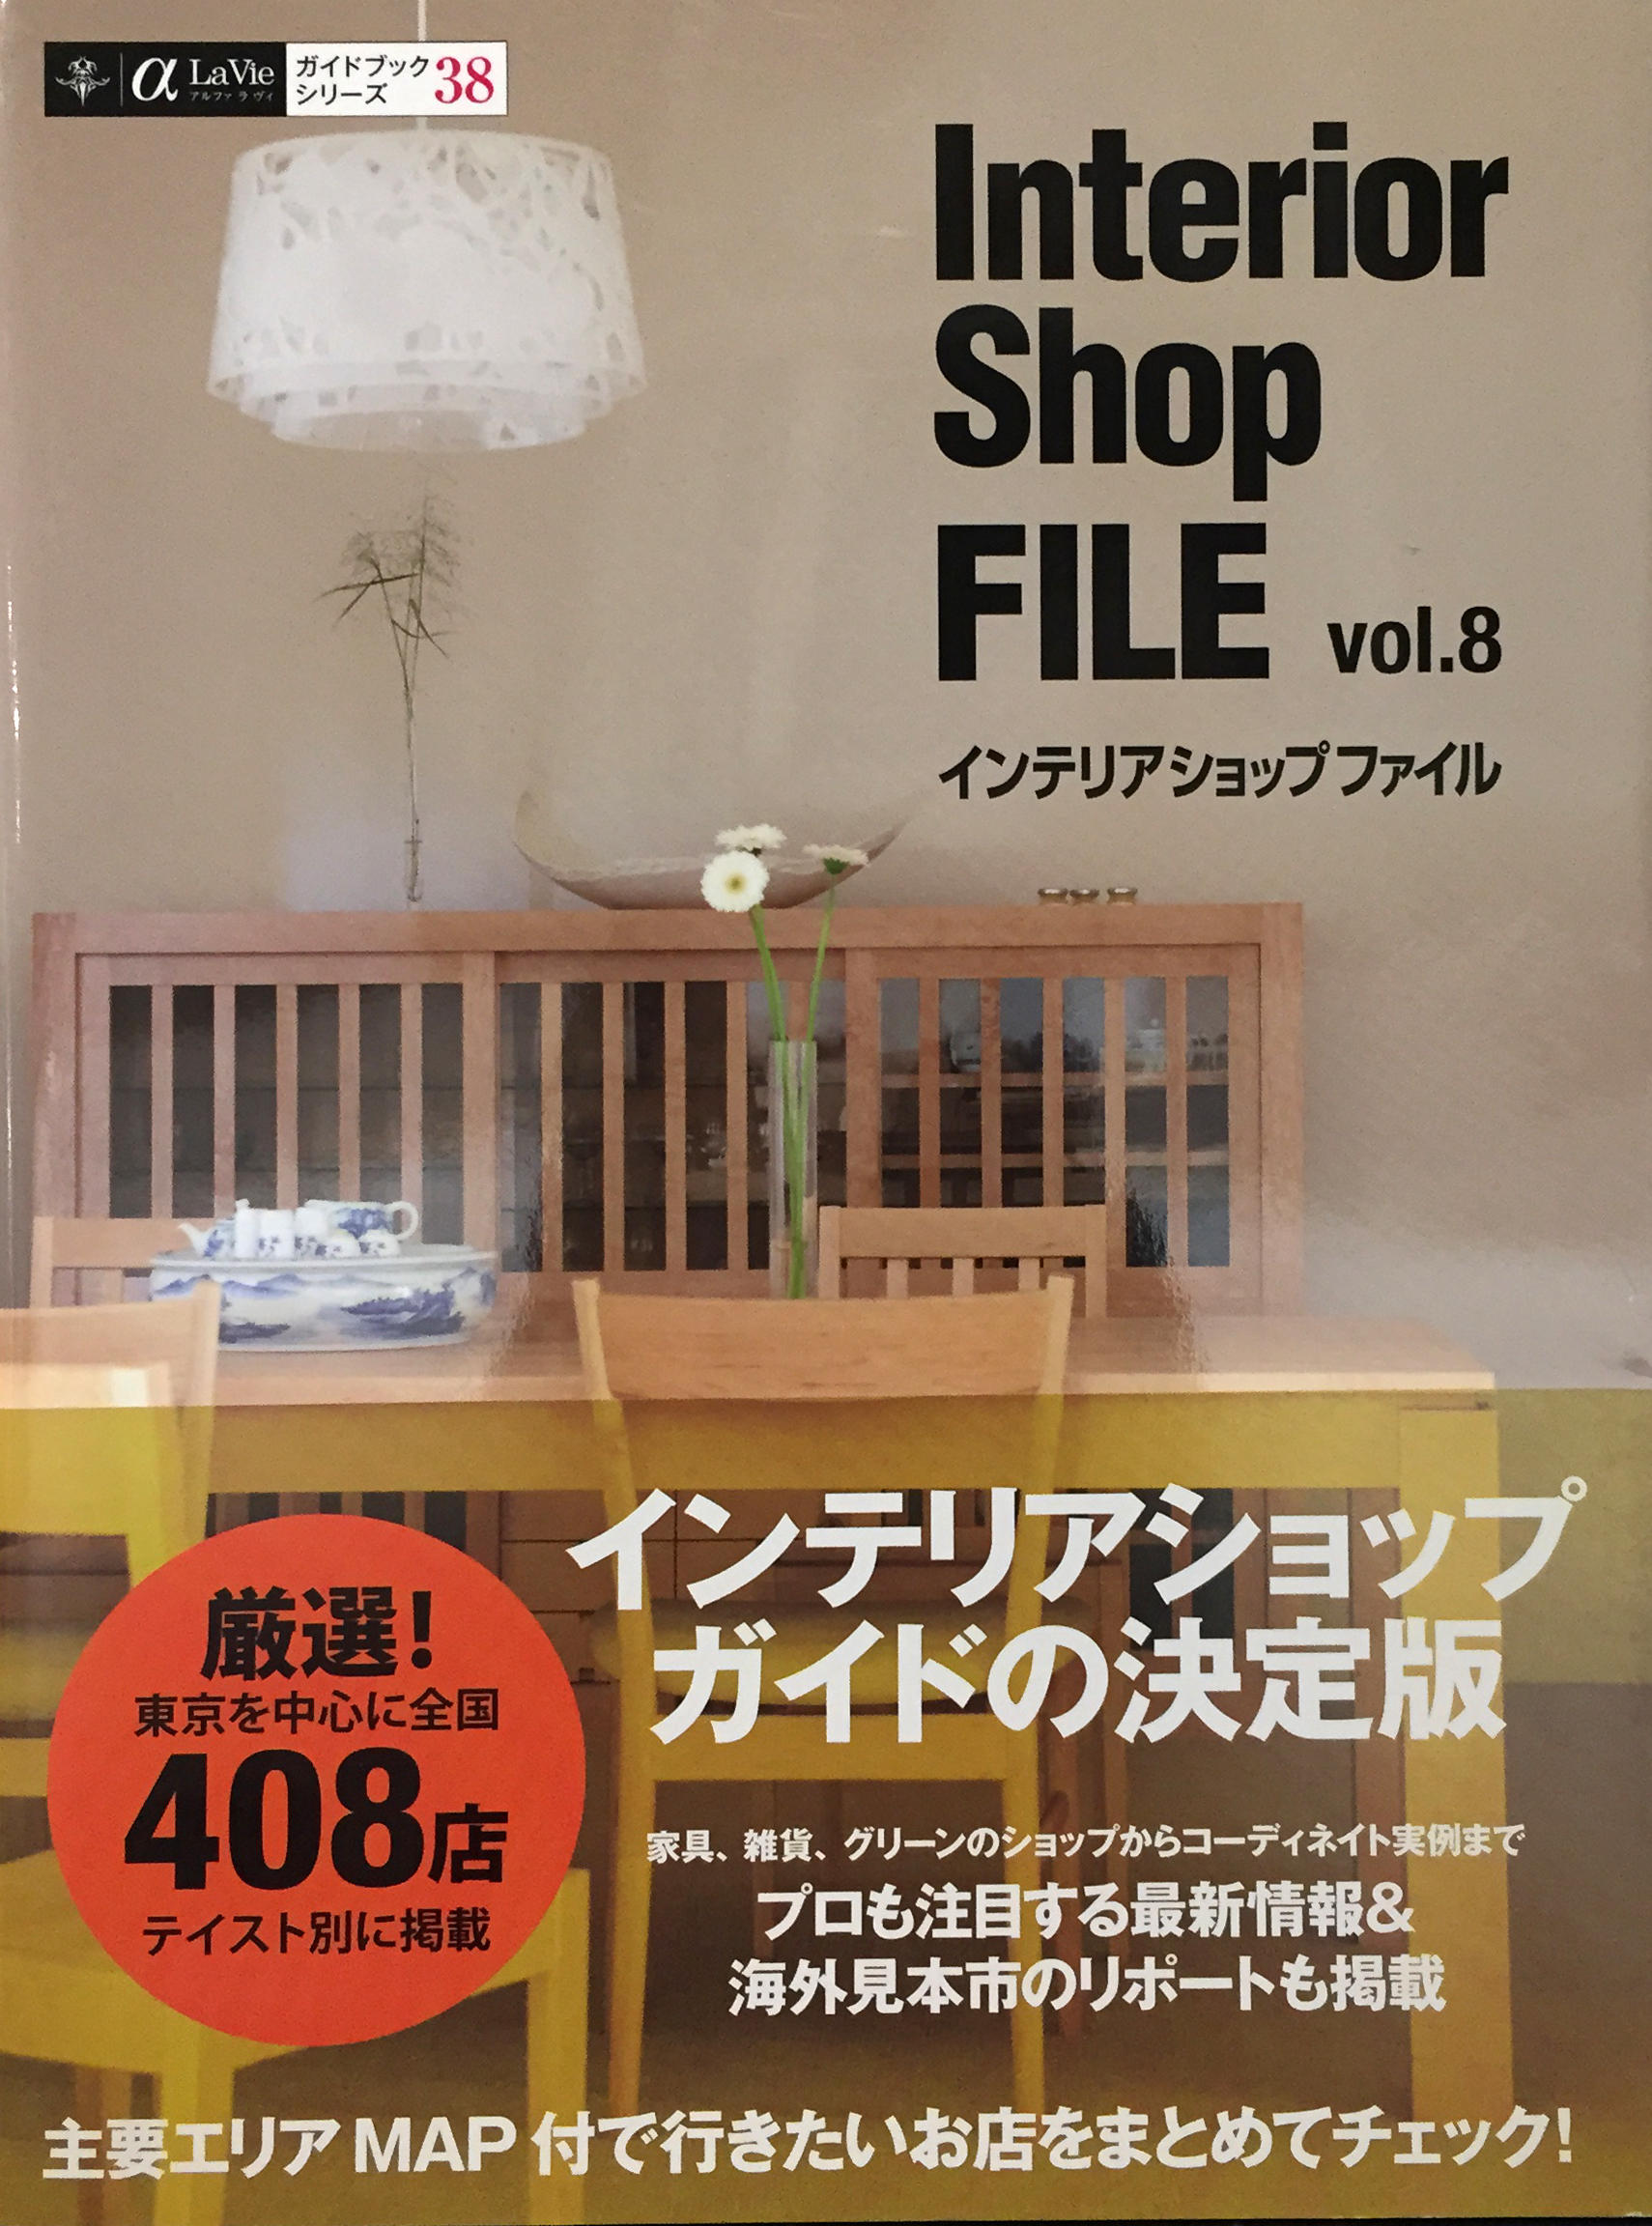 Interior Shop FILE vol.8